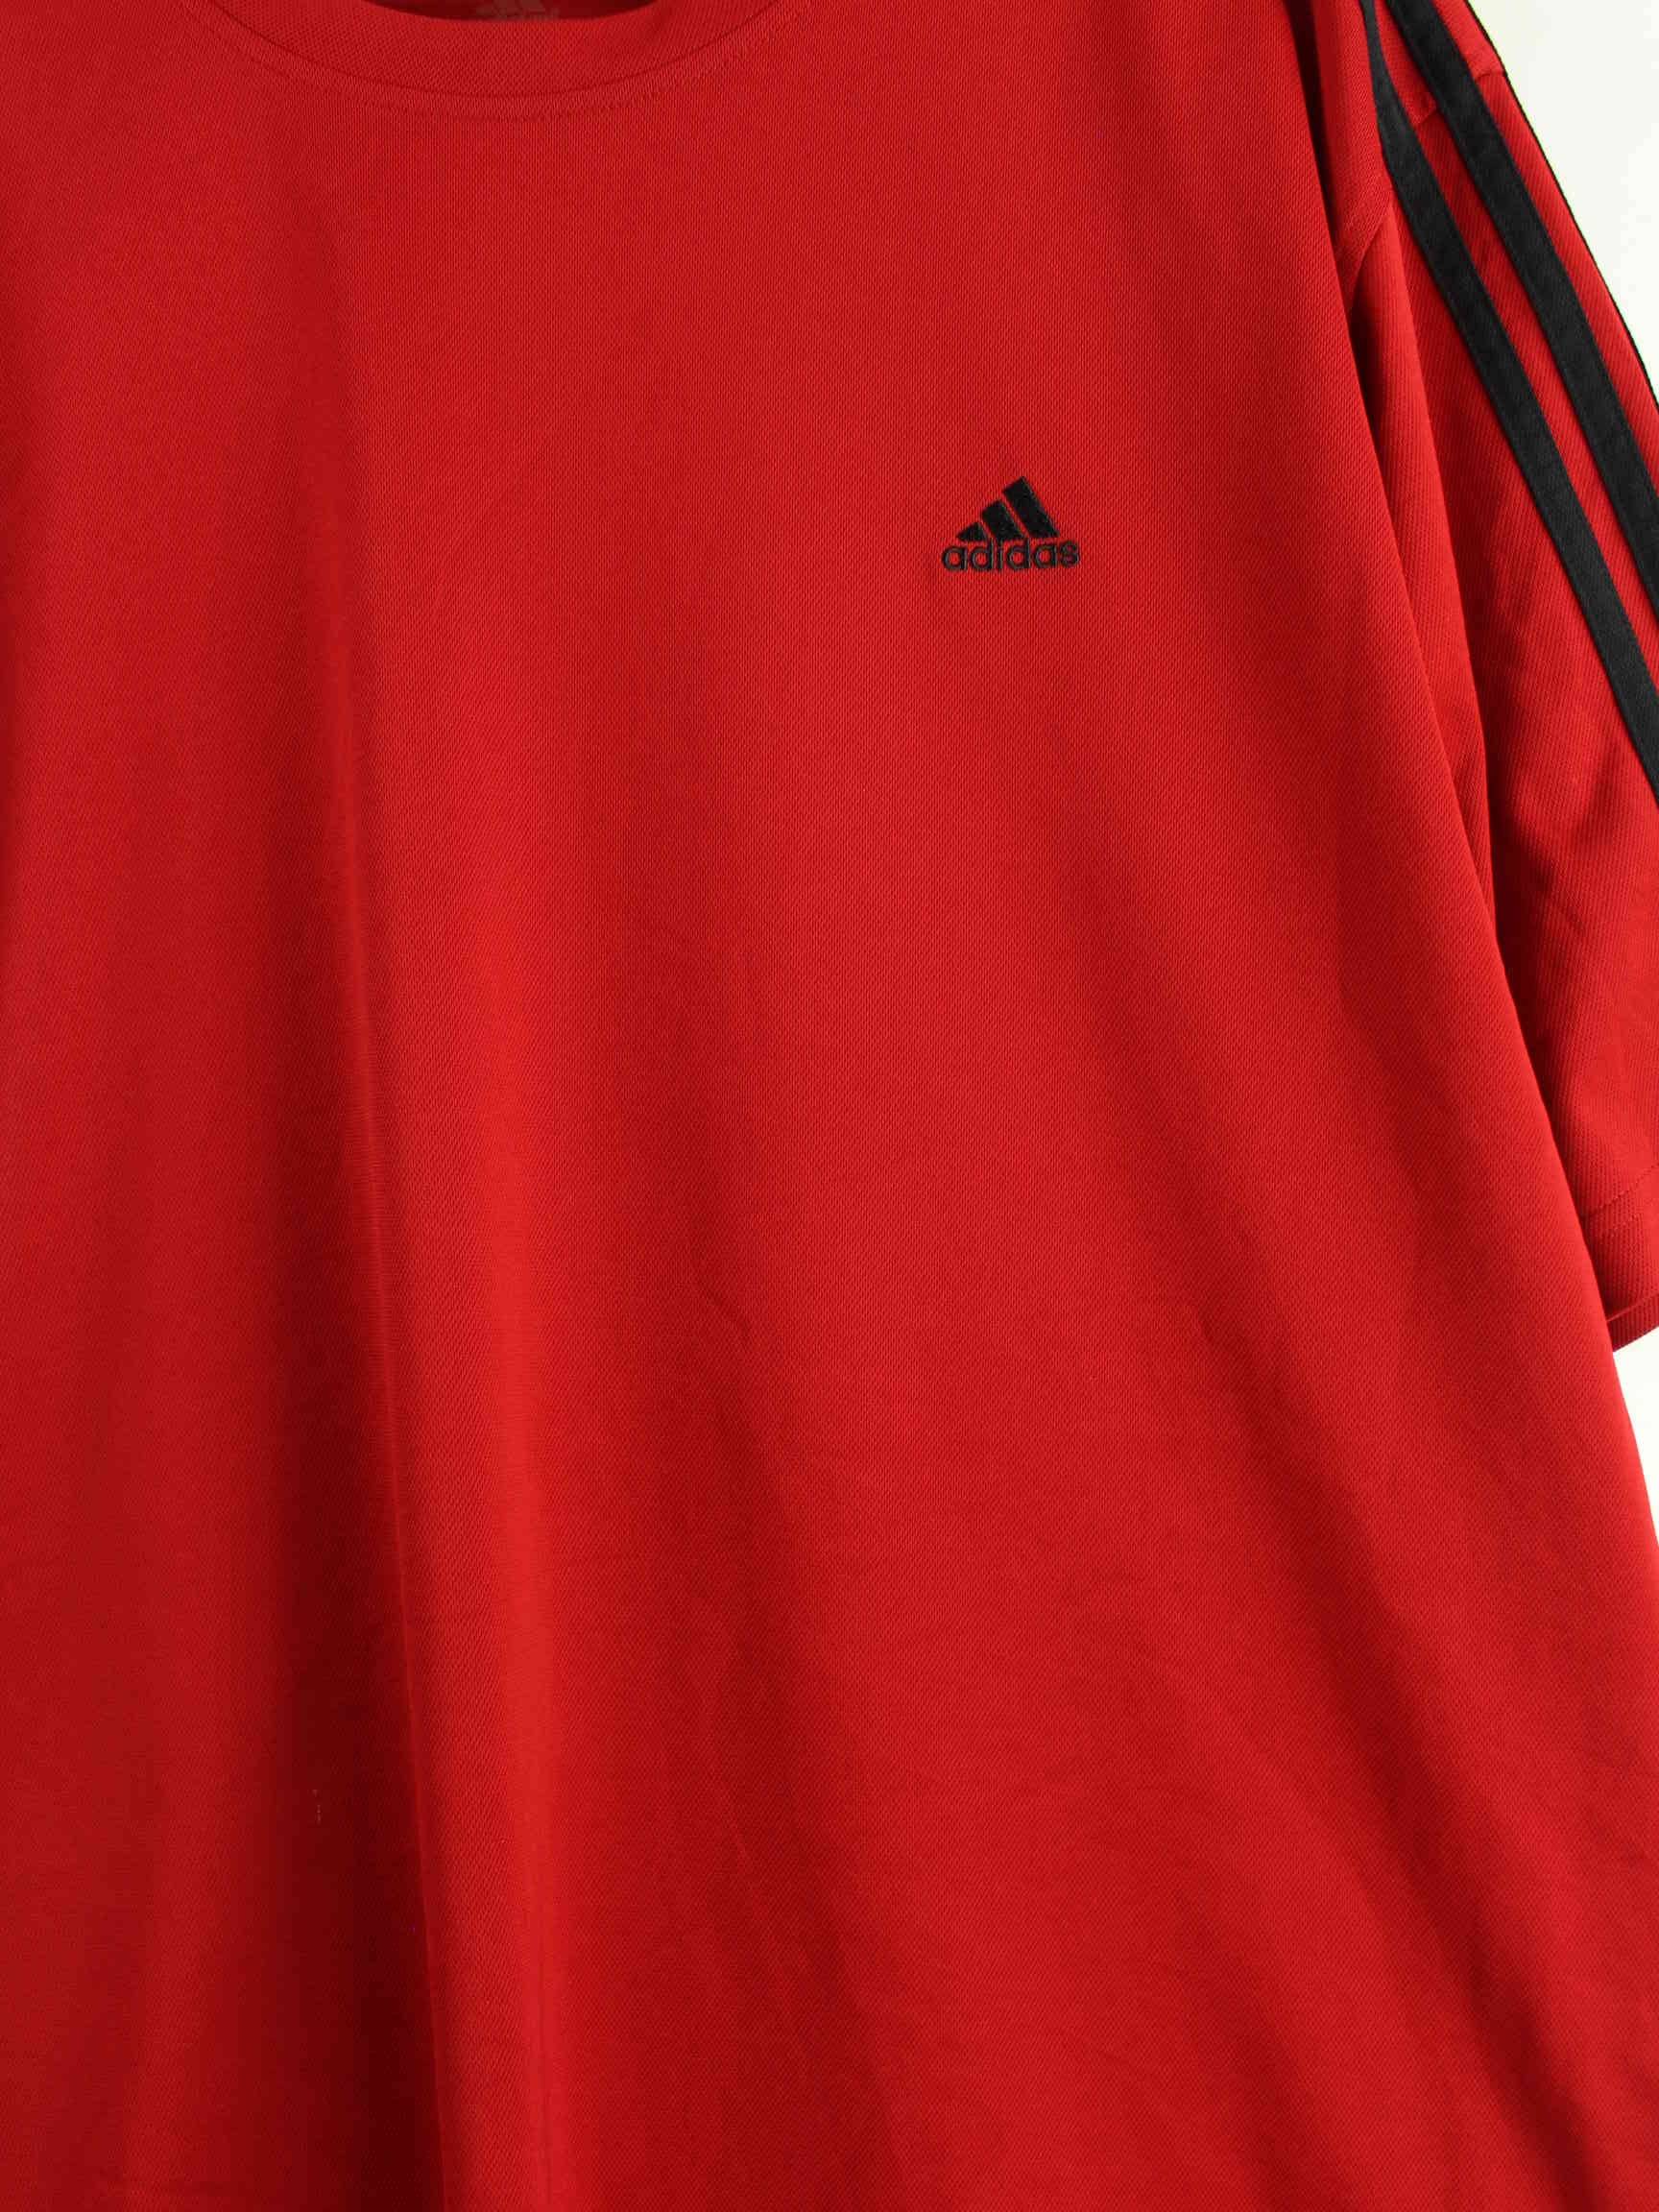 Adidas Sport T-Shirt Rot XXL (detail image 1)